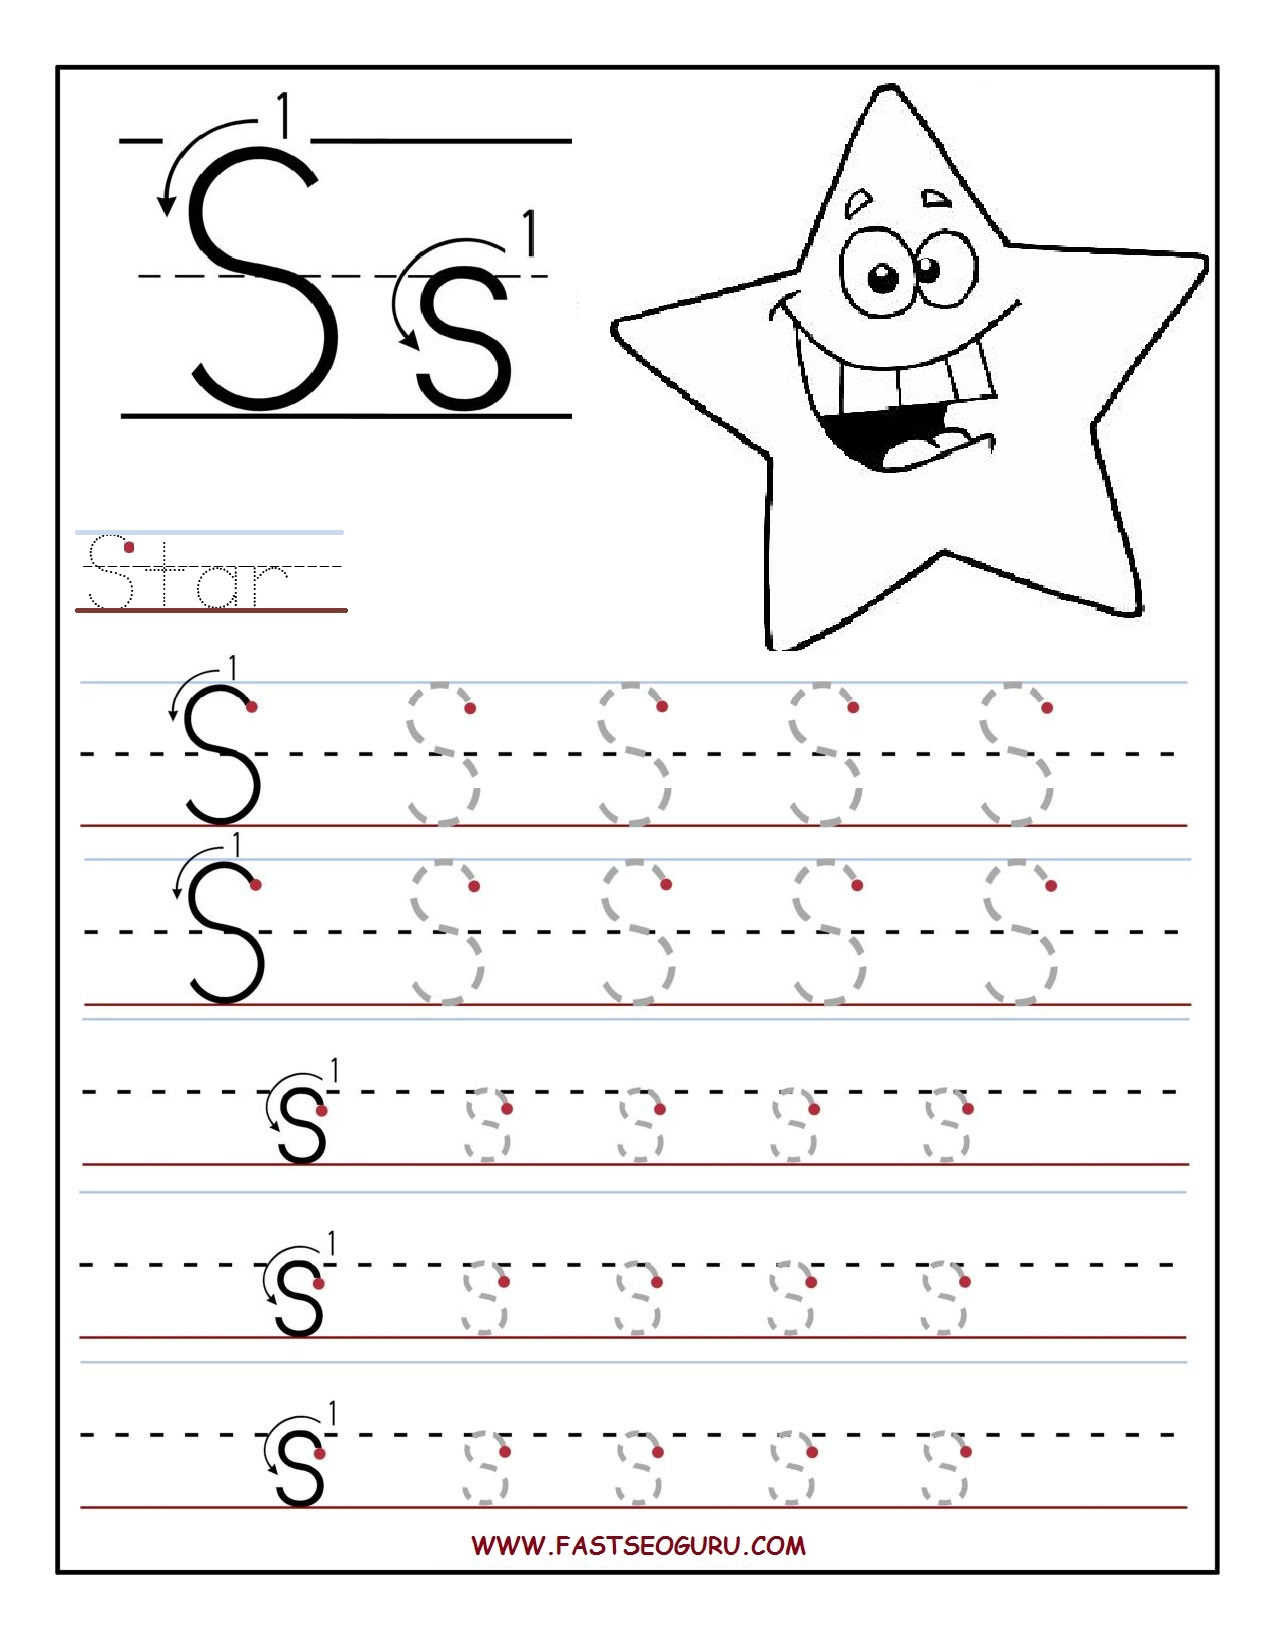 Printable letter S tracing worksheets for preschool